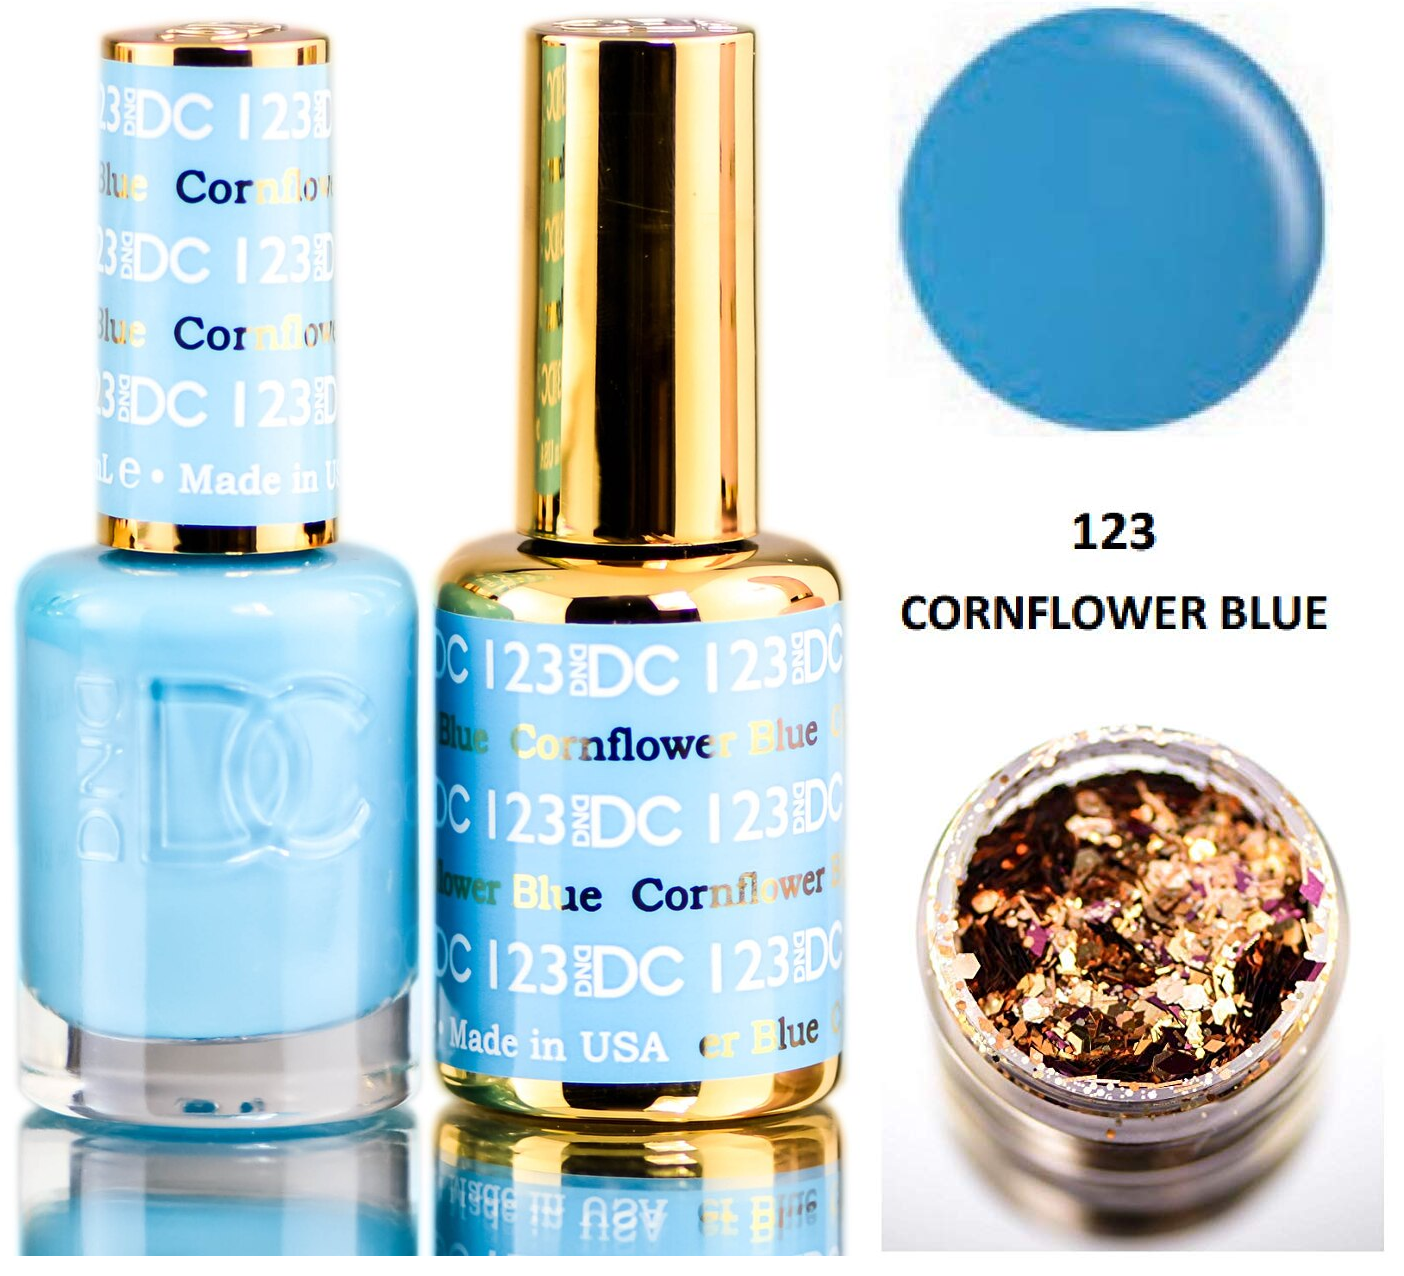 DND DC Blues & Greens POLISH DUO, Gel Lacquer 0.5 oz + Matching Nail Polish Color 0.5 oz, Daisy Nails (with bonus side Glitter) Made in USA (Cornflower Blue (123).) - Walmart.com